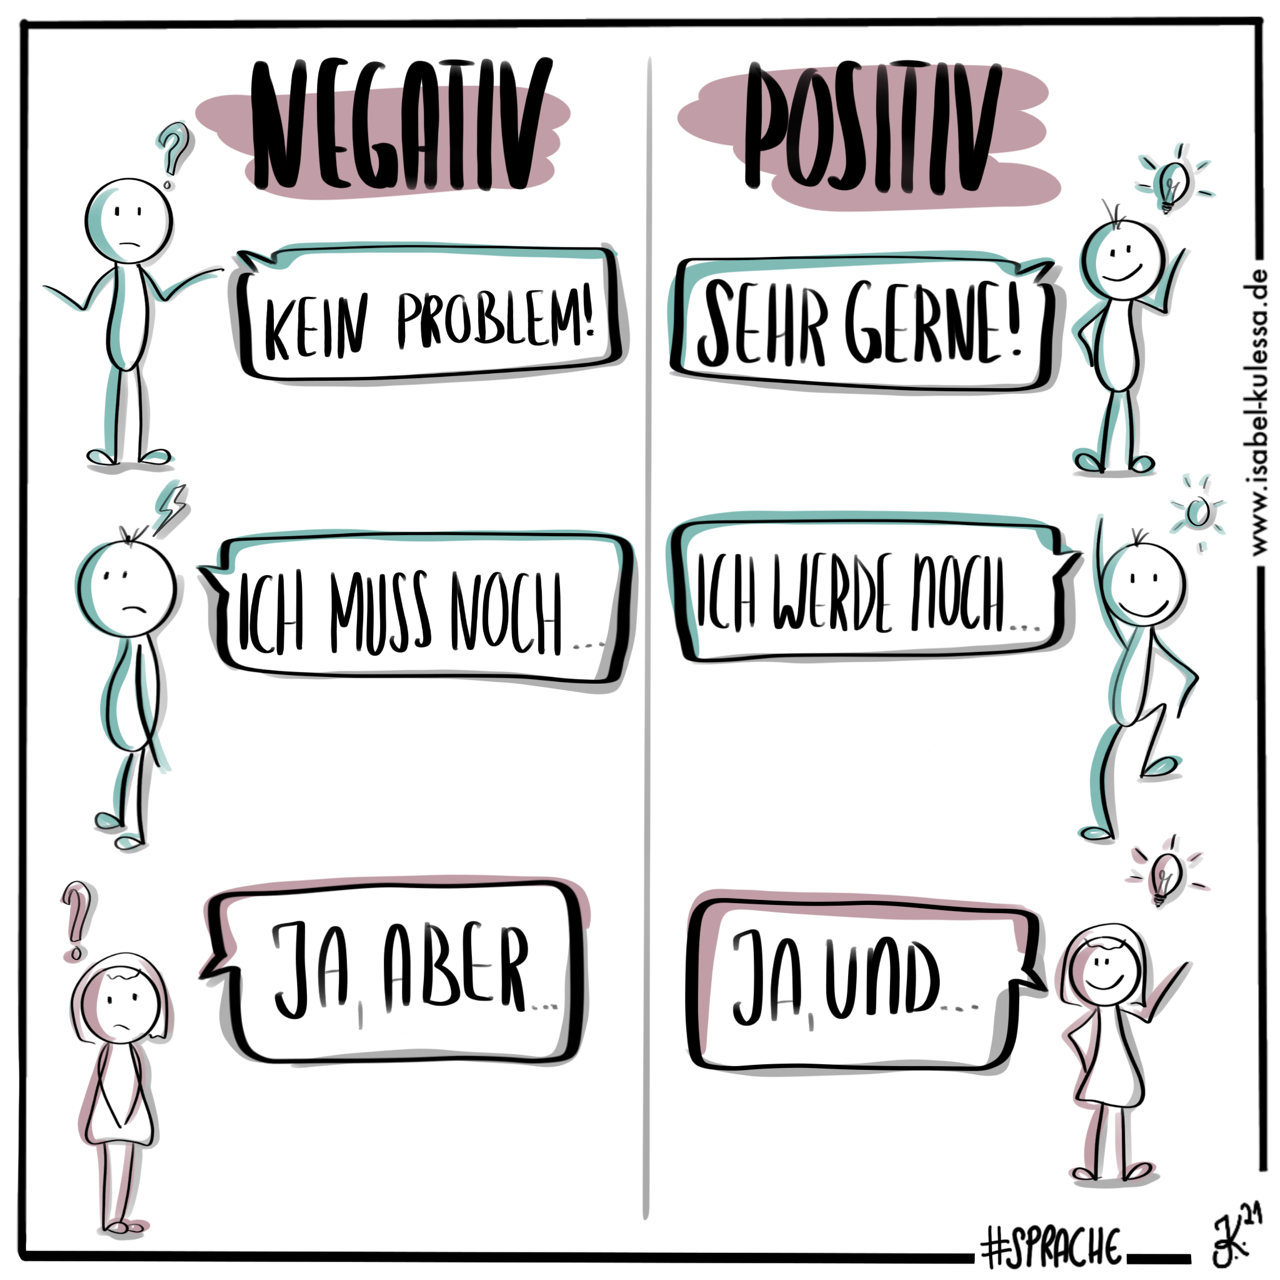 Positive Sprache verändert Kommunikation